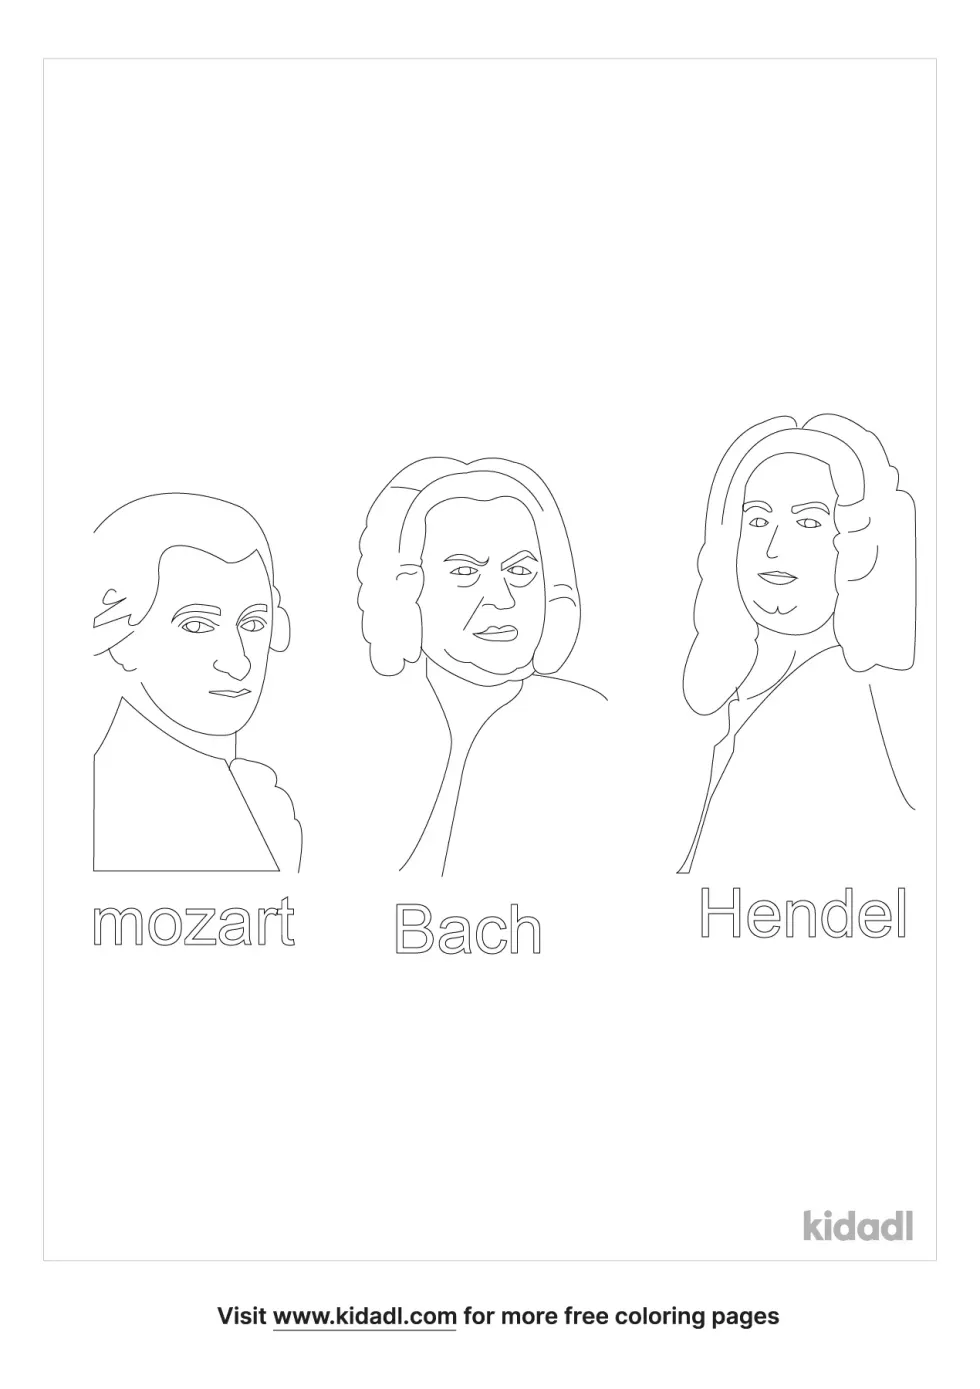 Bach, Hendel & Mozart